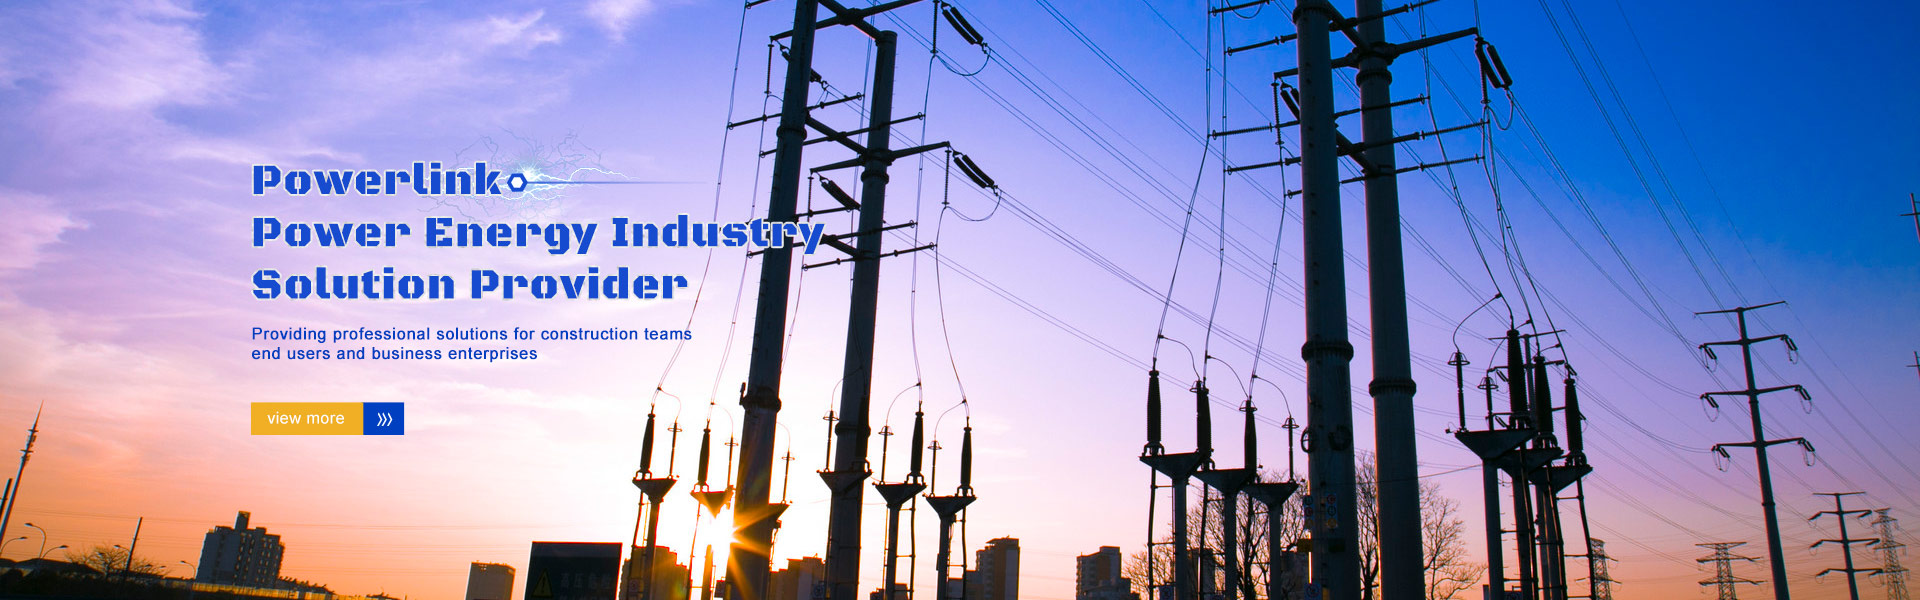 Powerlink Power Energy Industry  Solution Provider